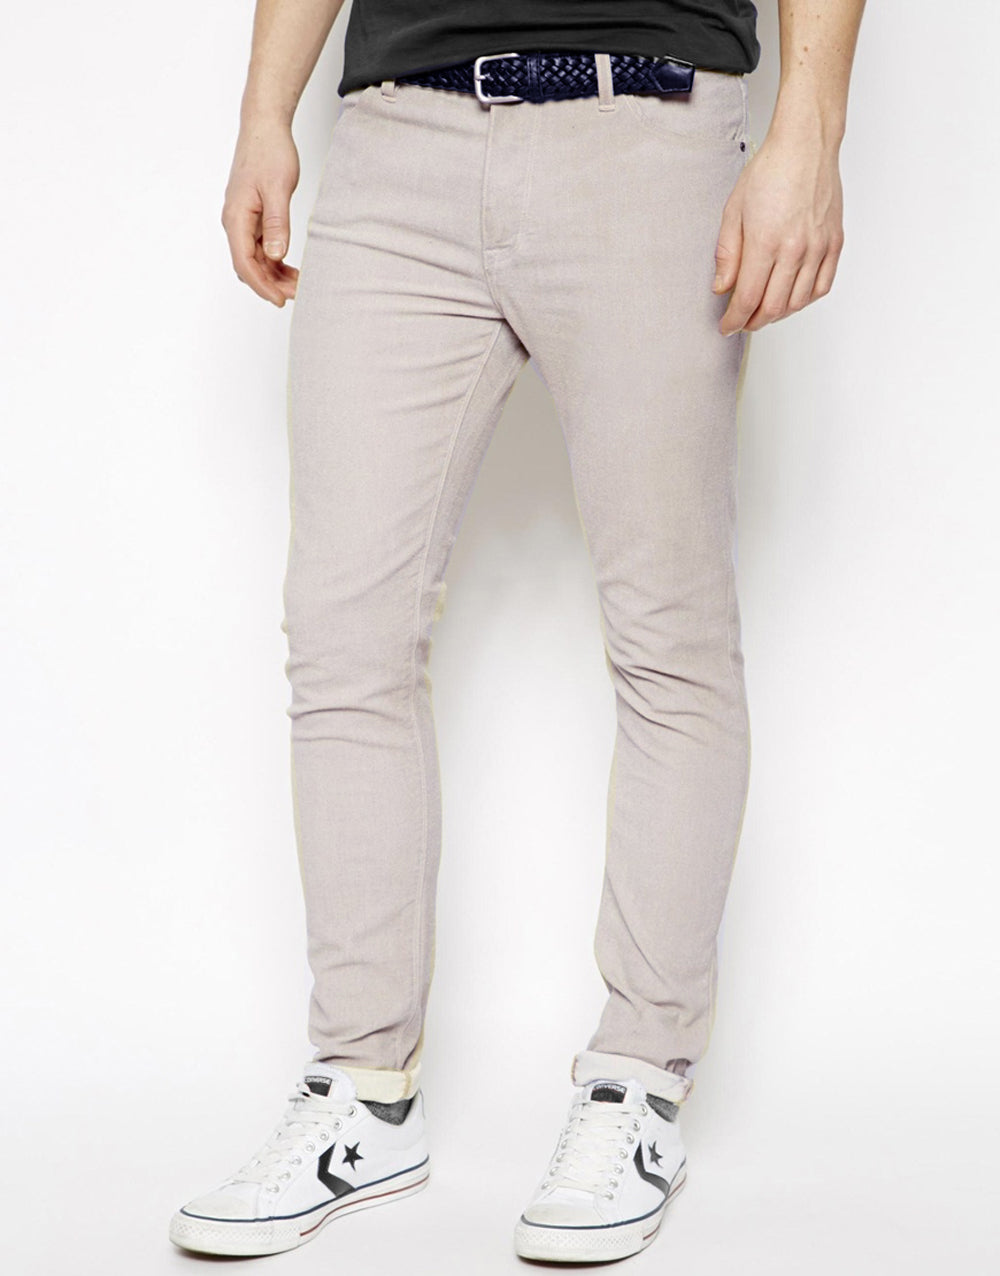 Men's LCJ Denim Super Skinny off white Jeans Slim Fit basics All Sizes